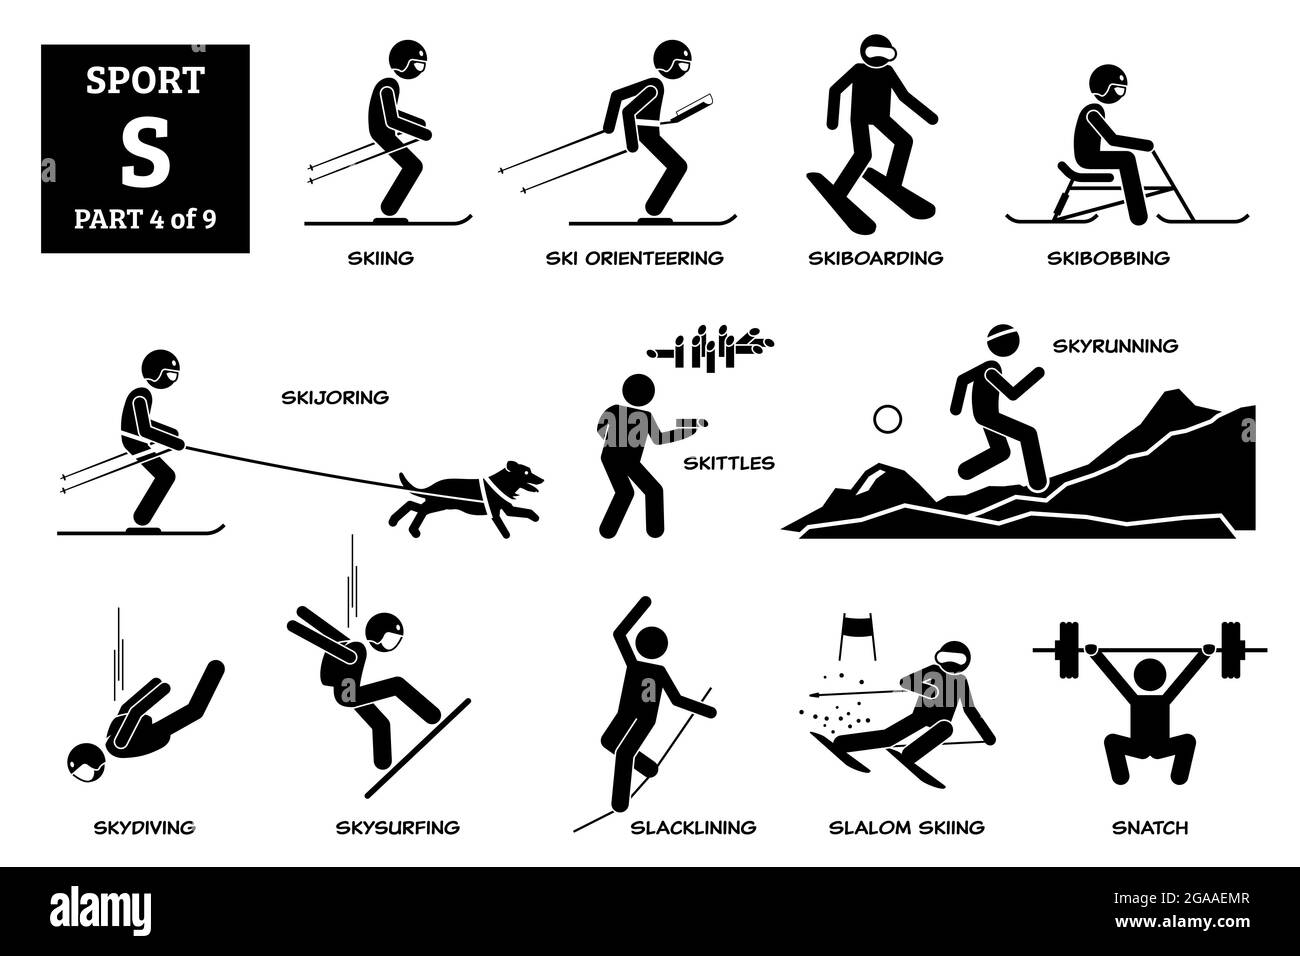 Sport games alphabet S vector icons pictogram. Skiing, ski orienteering, skiboarding, skibobbing, skijoring, skittles, skyrunning, skydiving, skysurfi Stock Vector